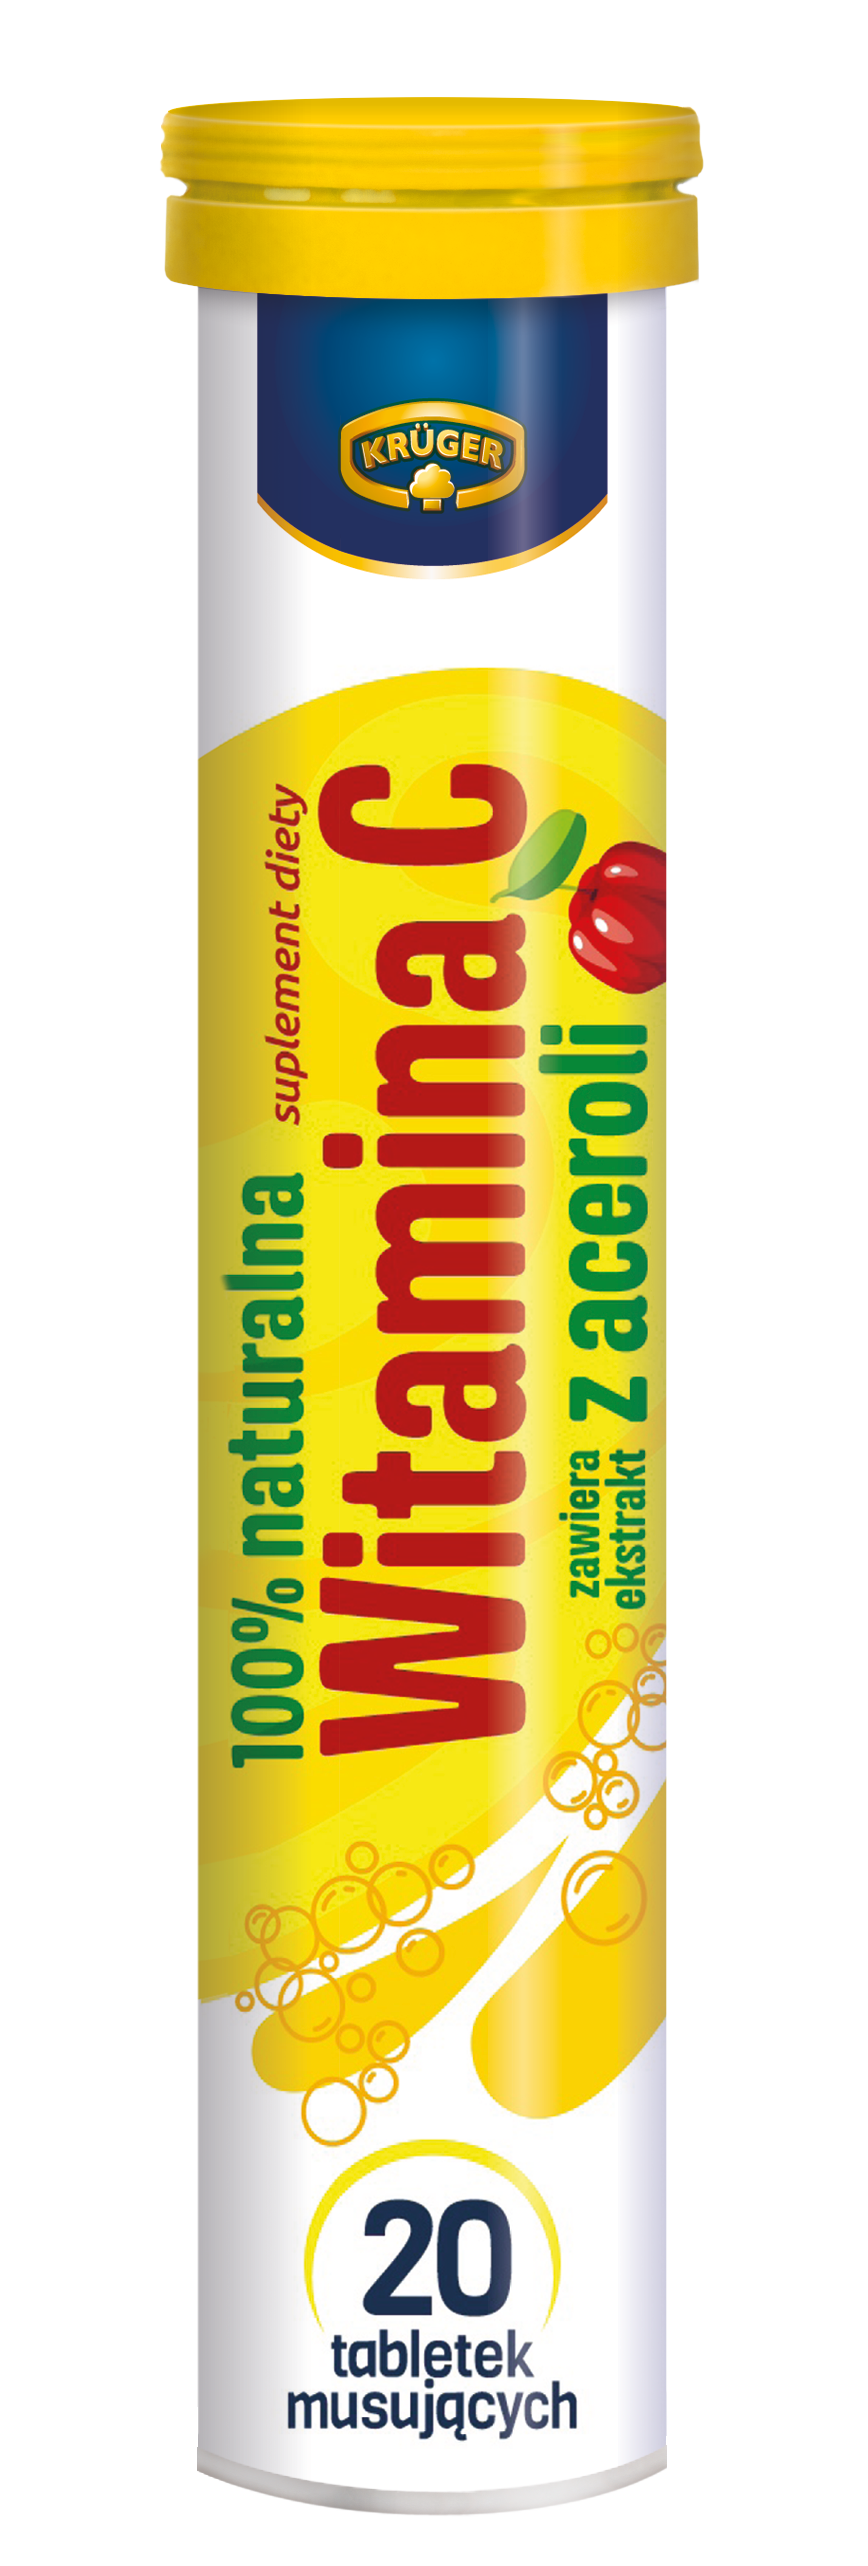 Krüger 100% naturalna Witamina C Tabletki musujące o smaku wiśniowym